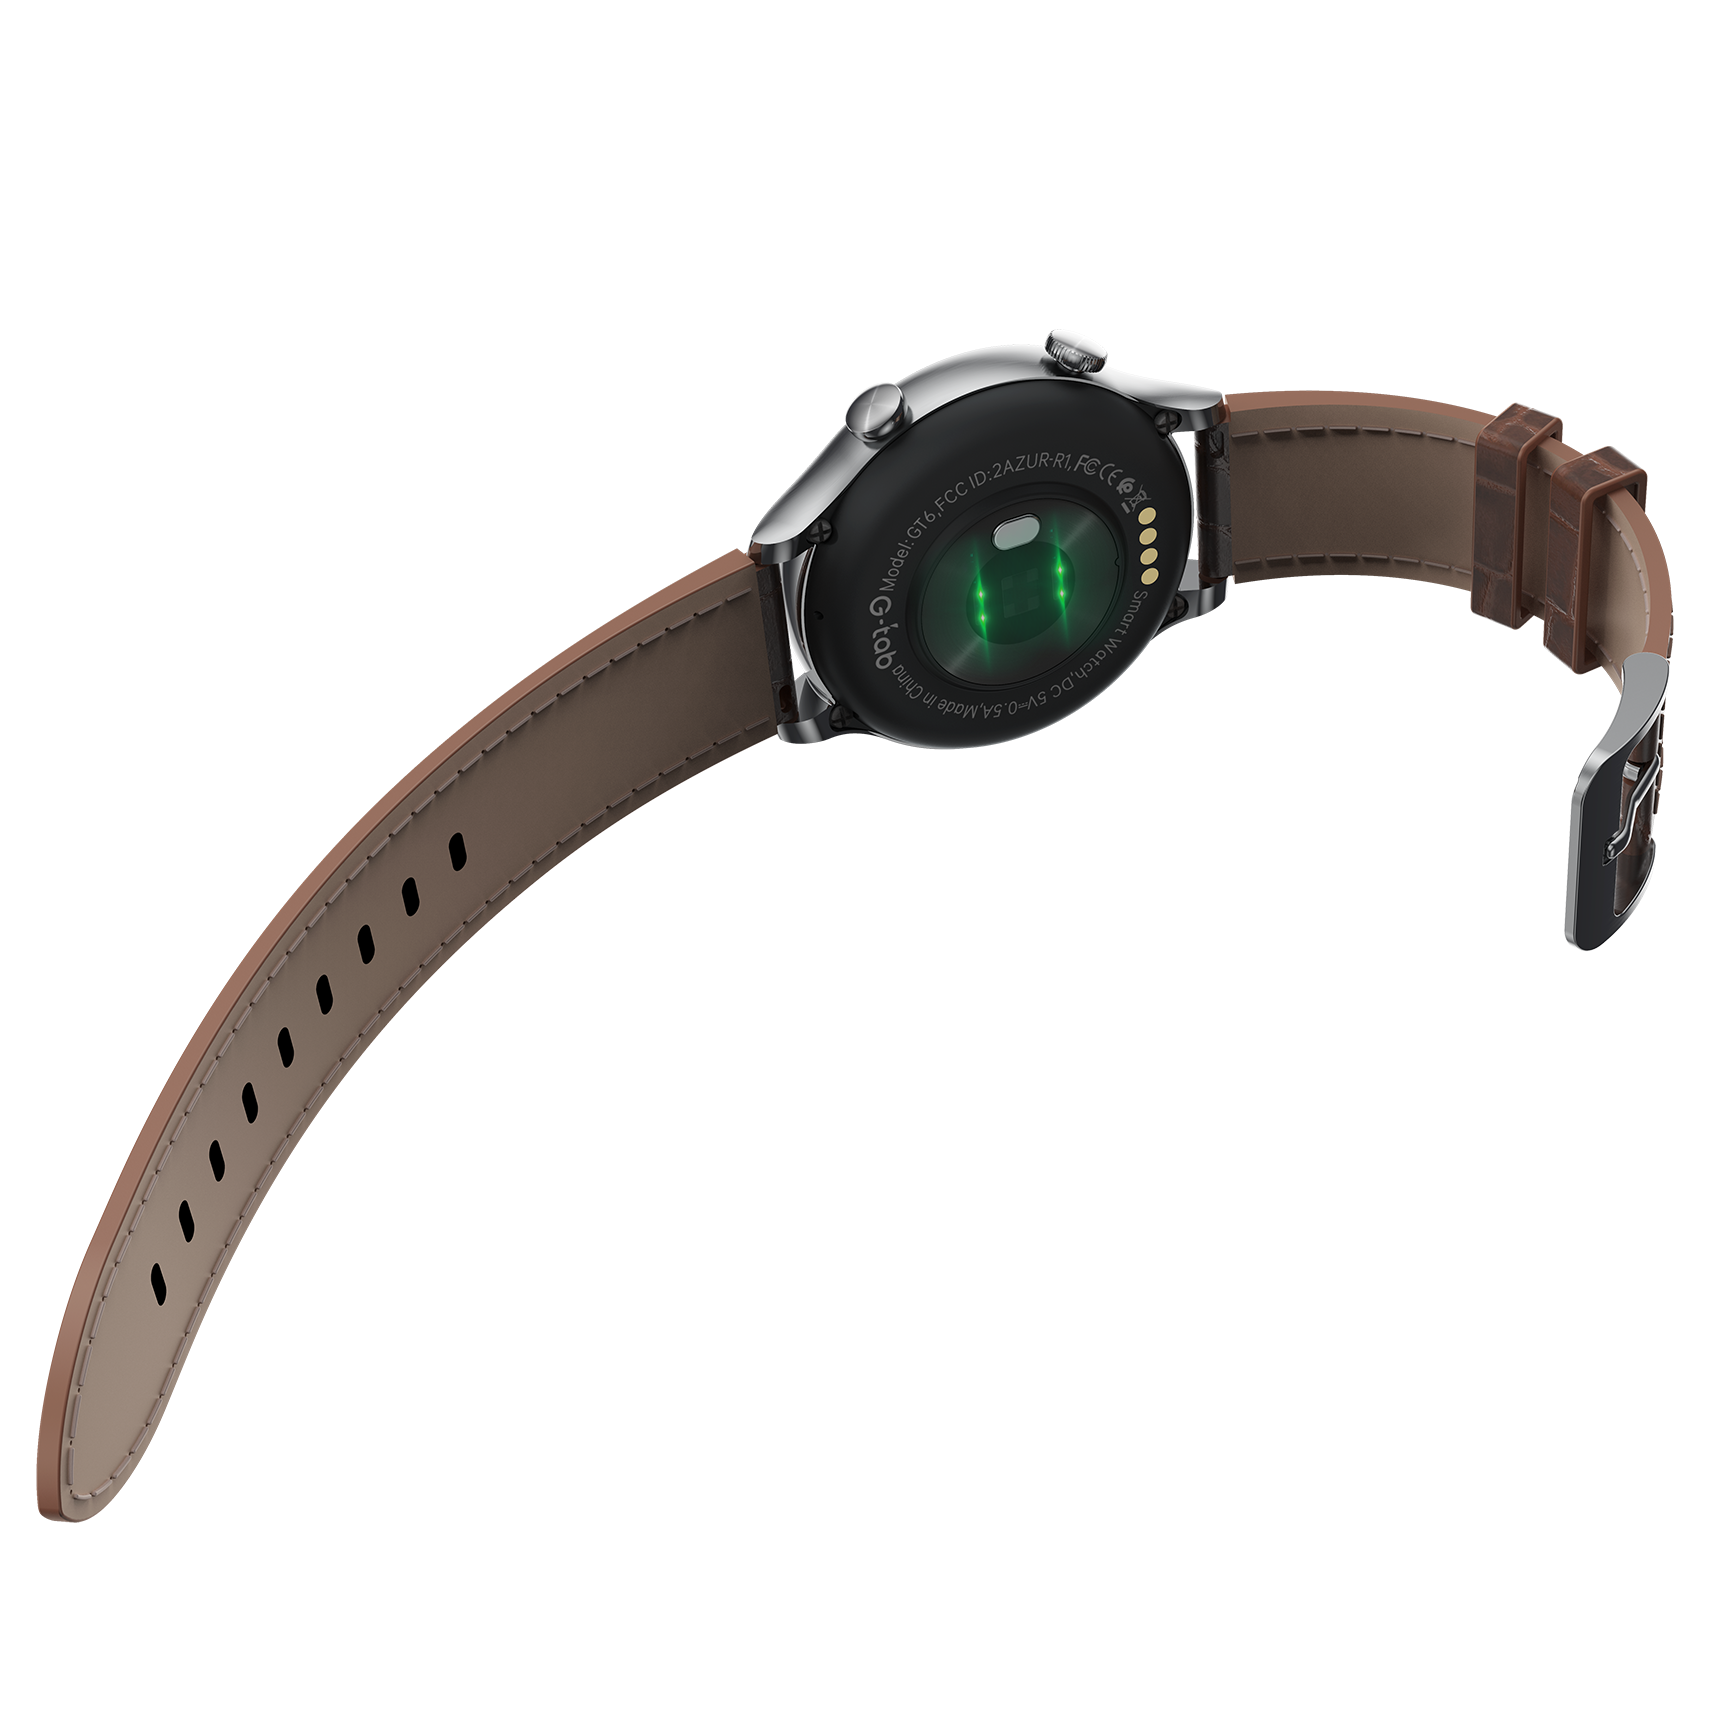 ساعت هوشمند جی تب مدل G-Tab model GT6 smart watch